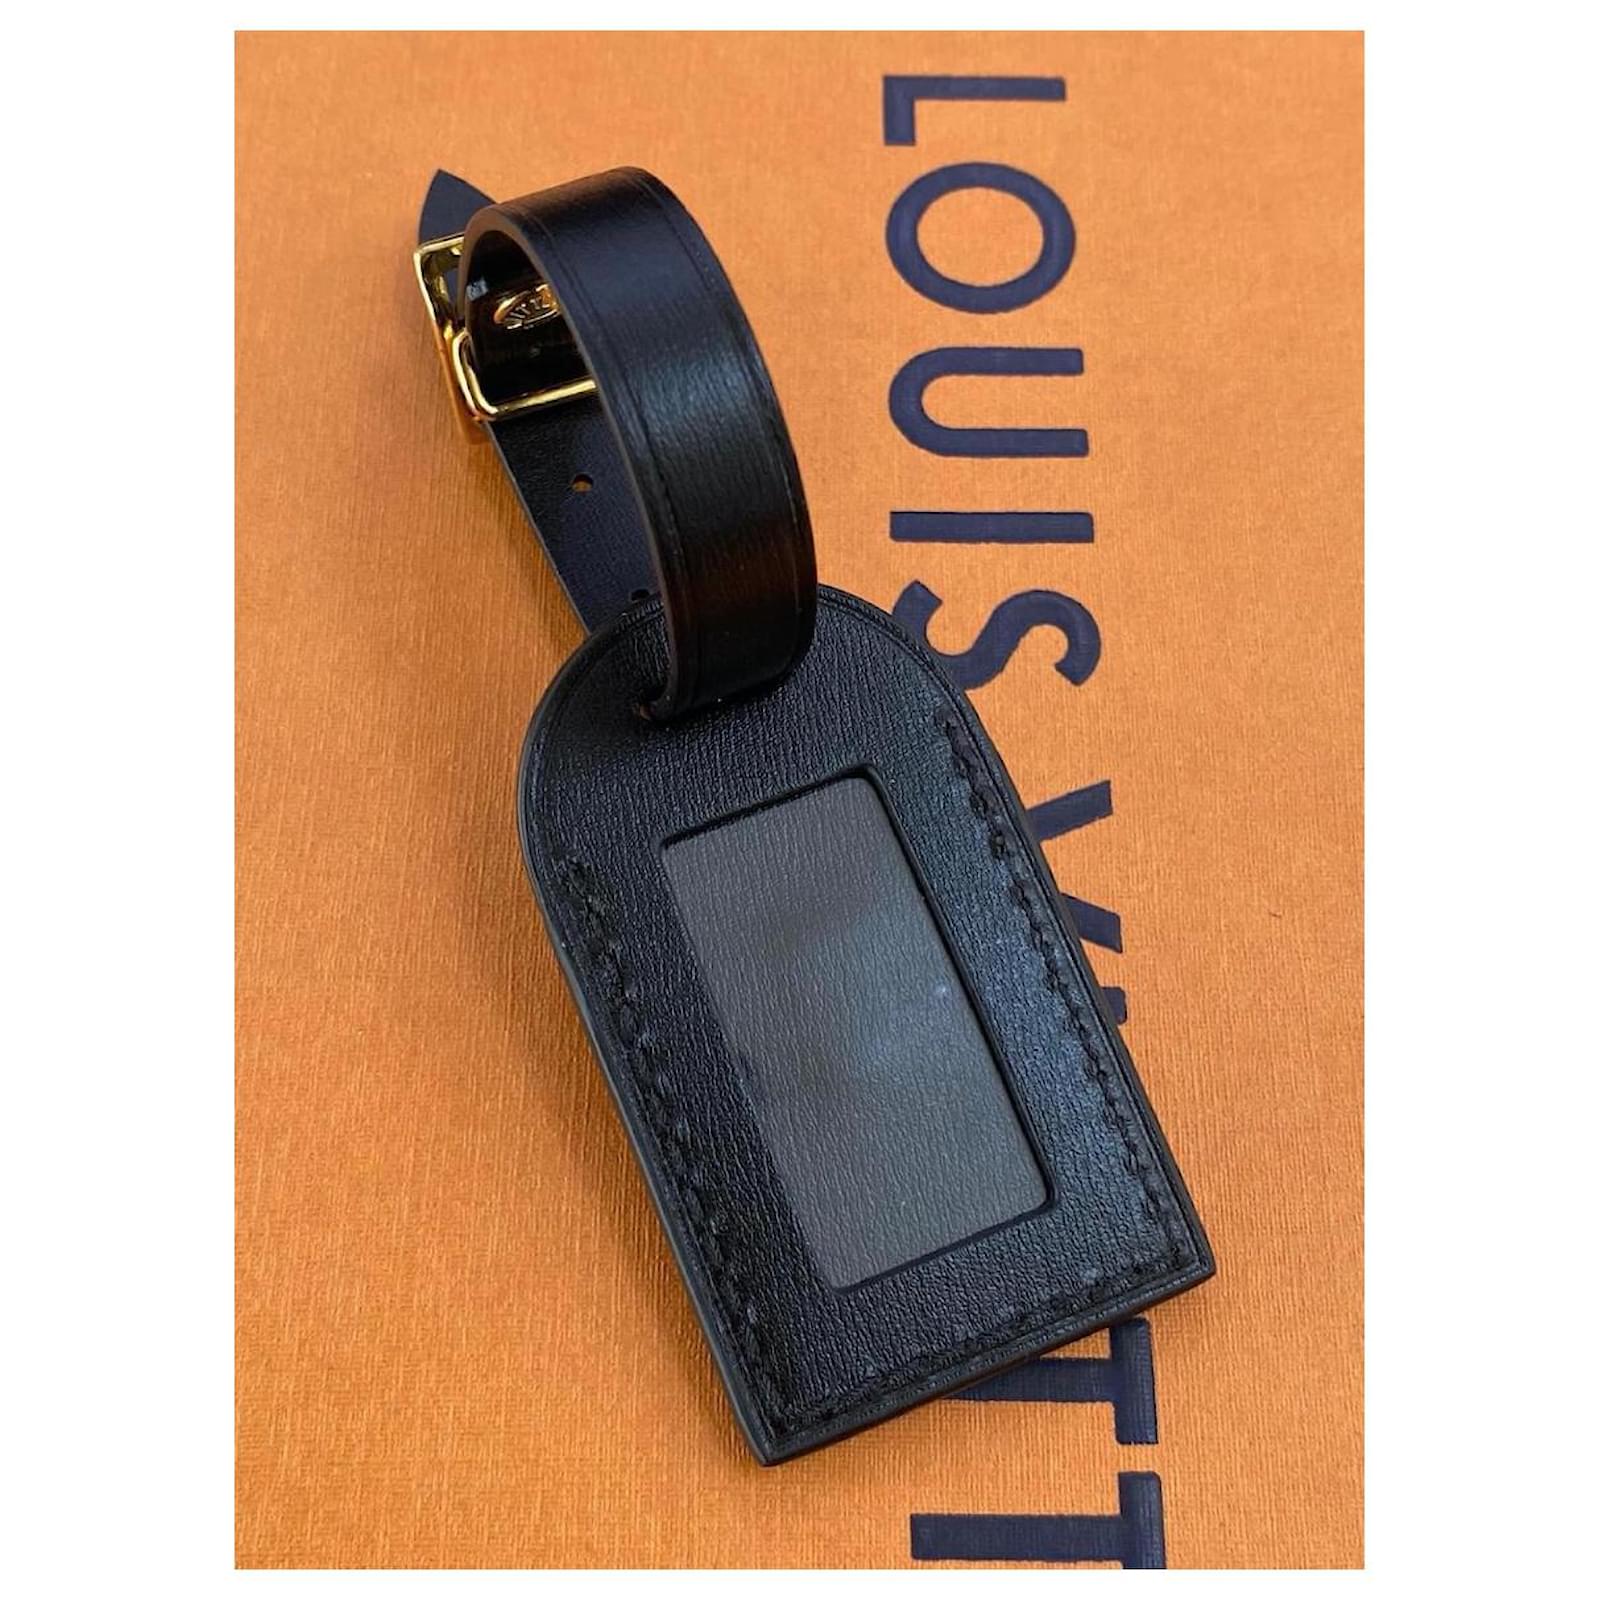 Louis Vuitton Black Leather Luggage Tag Bag Charm 7lv613